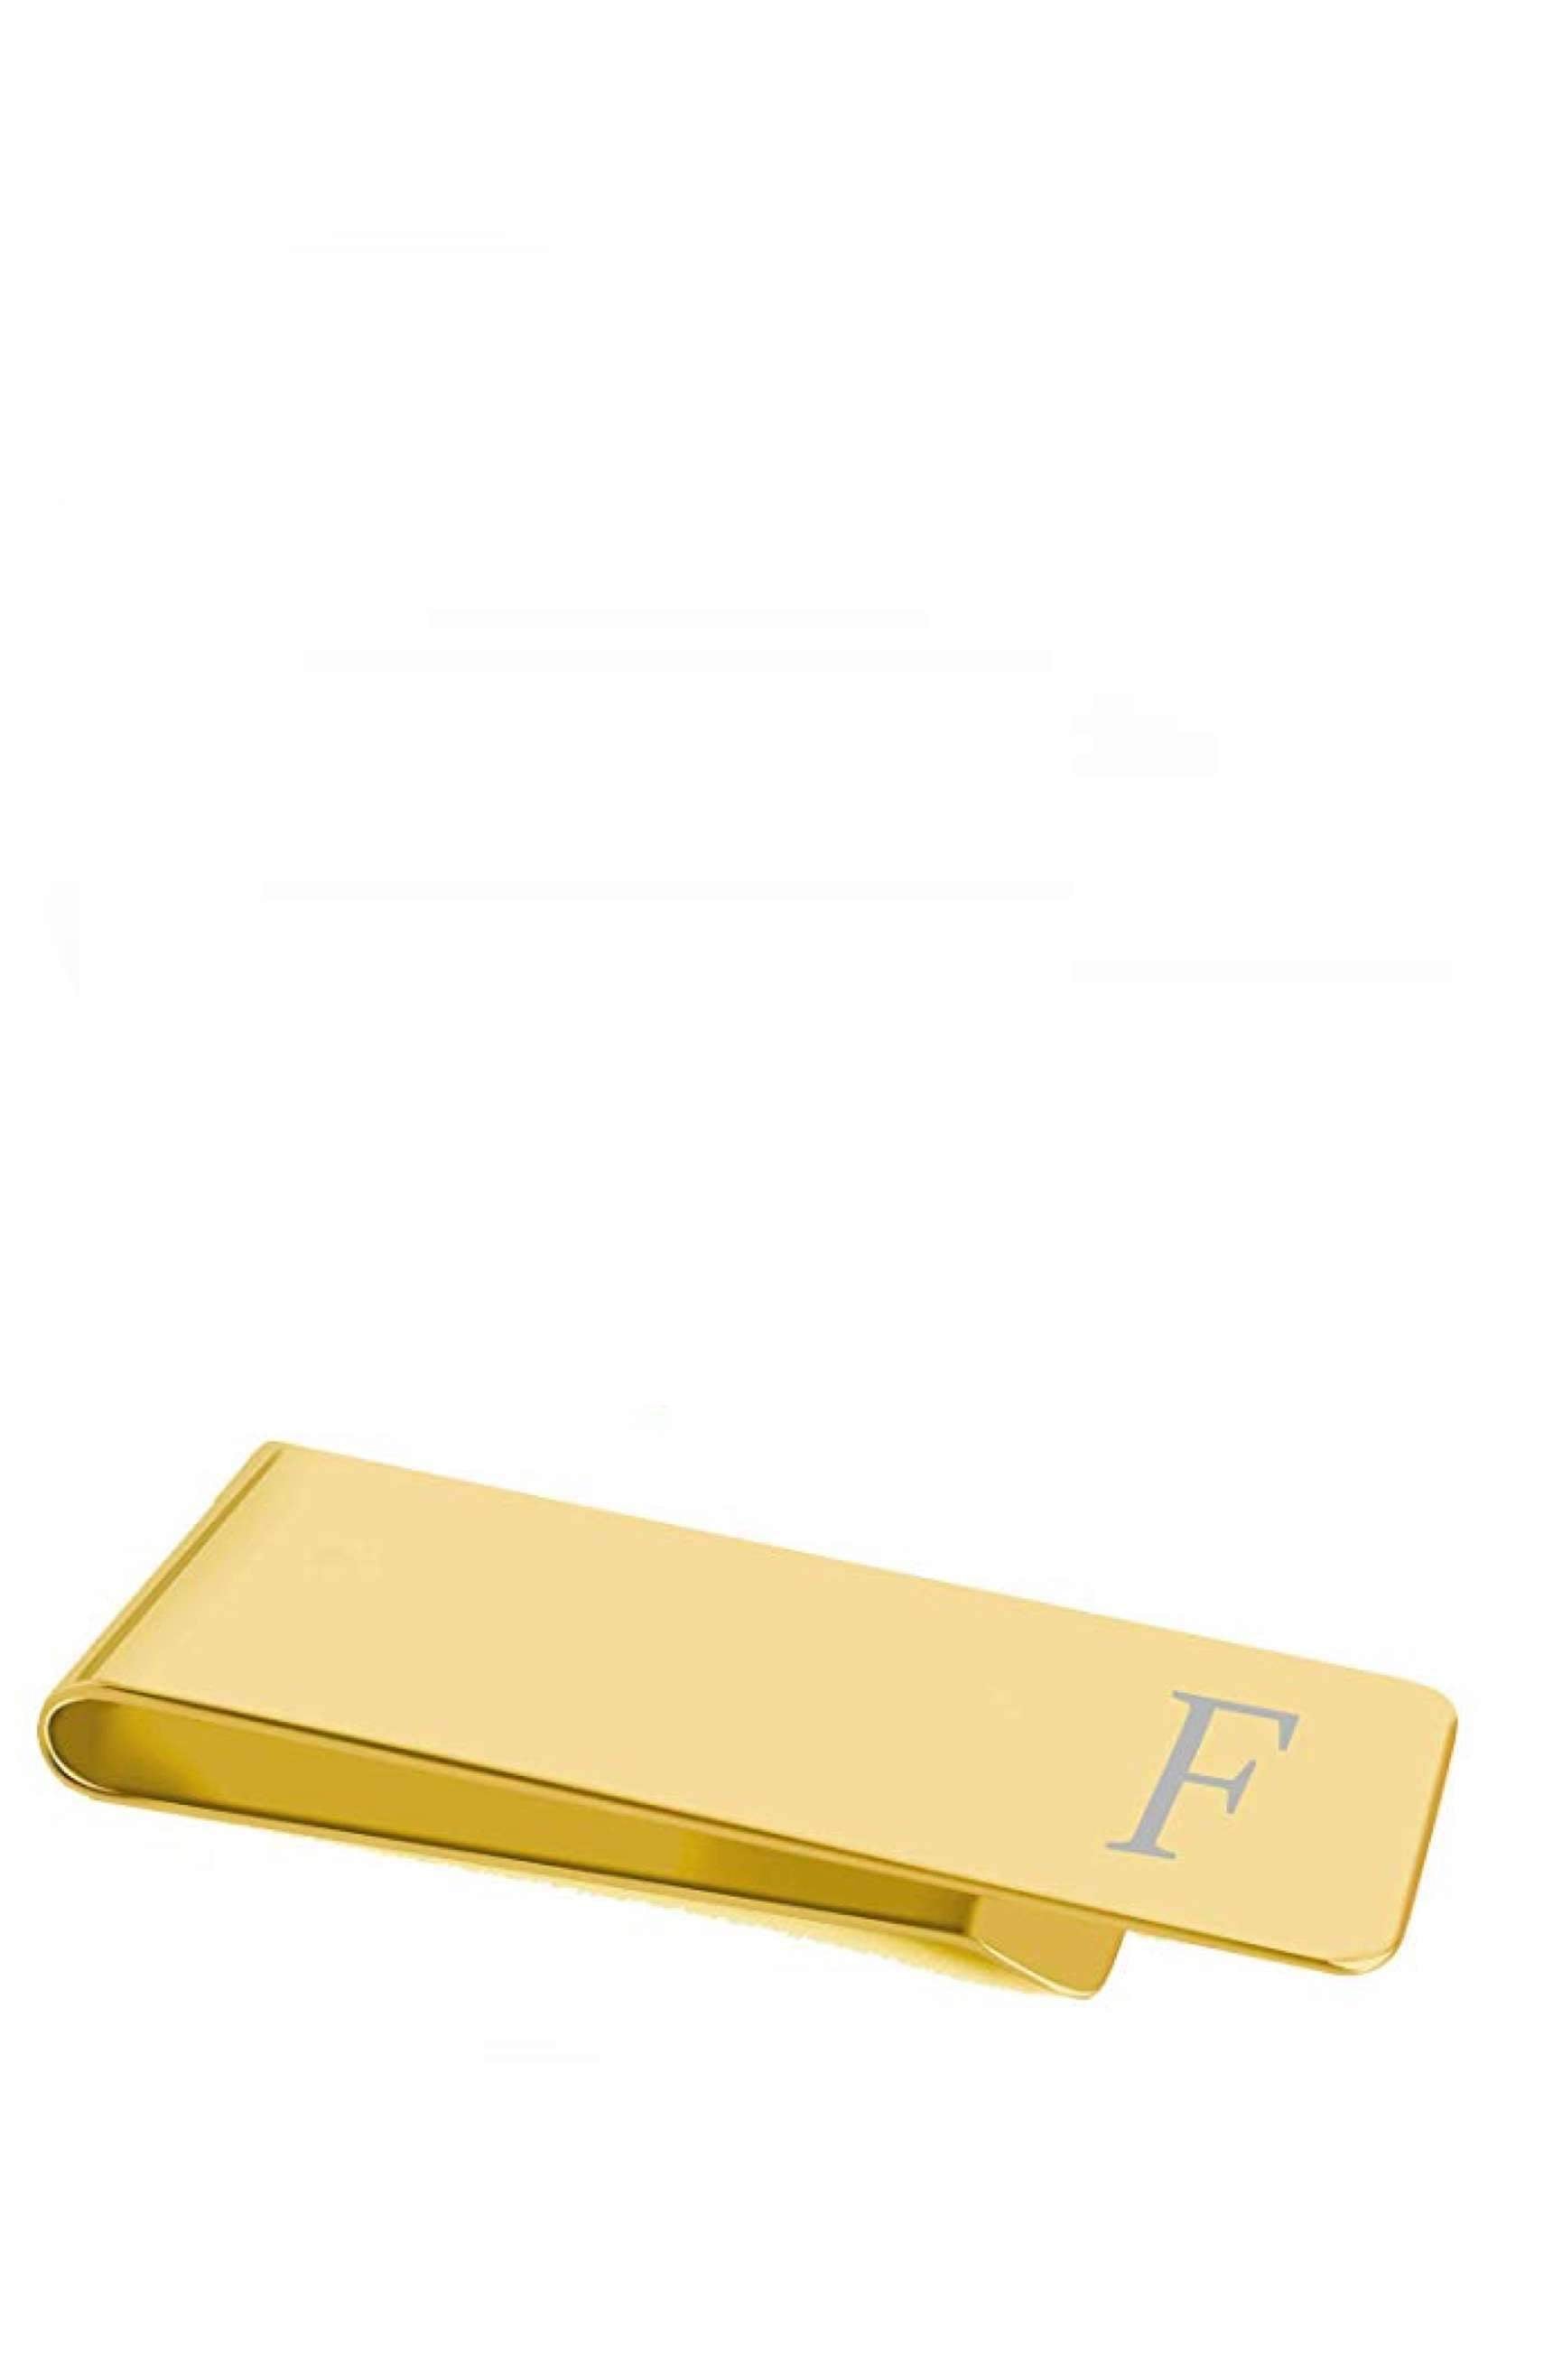 18K Gold Initial "F" Money Clip